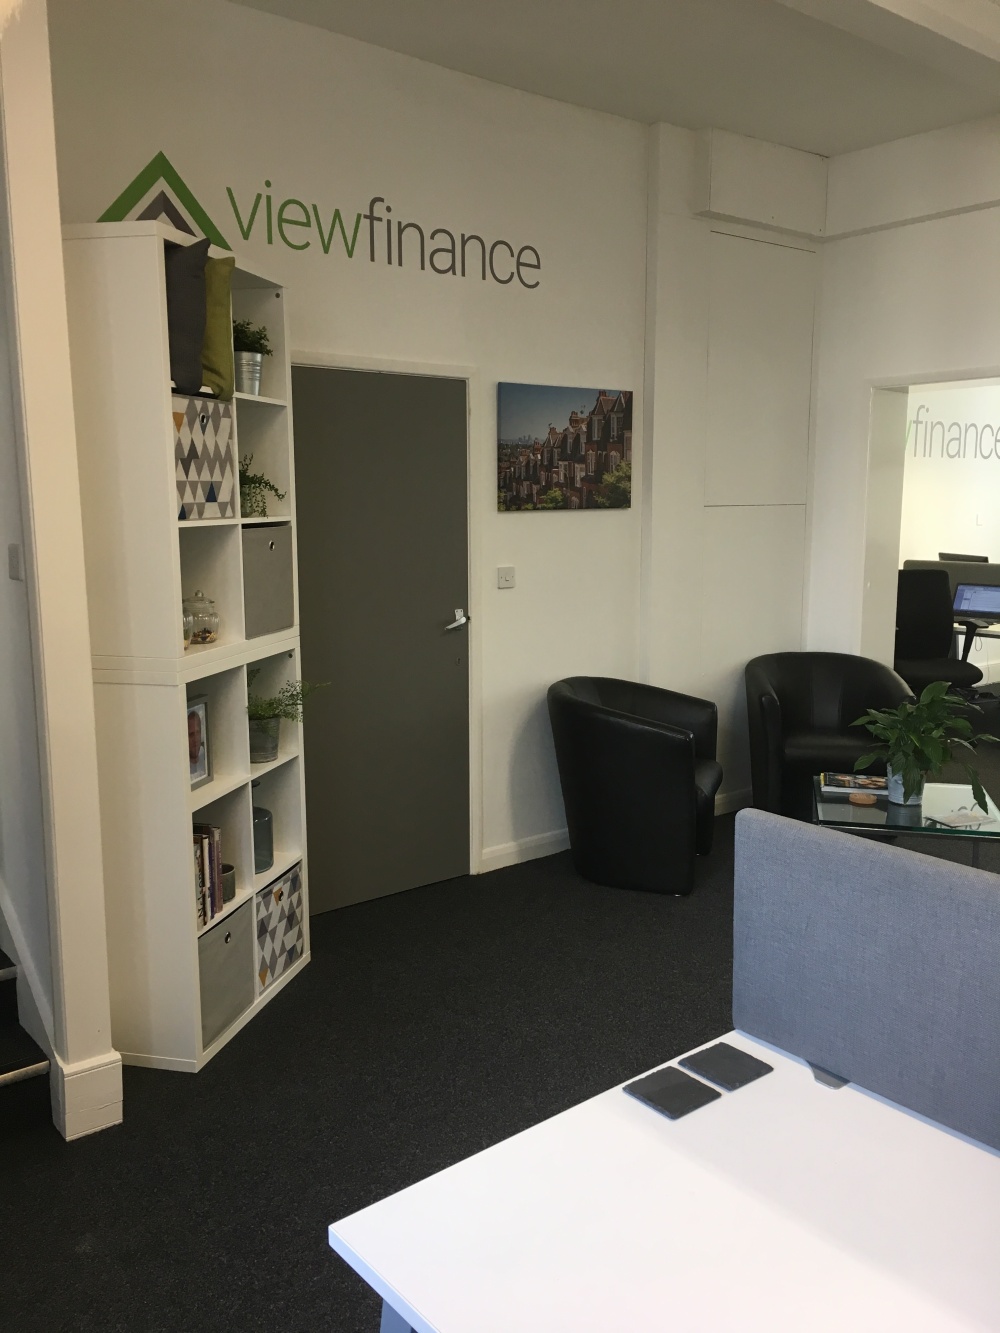 View Finance Ltd 09